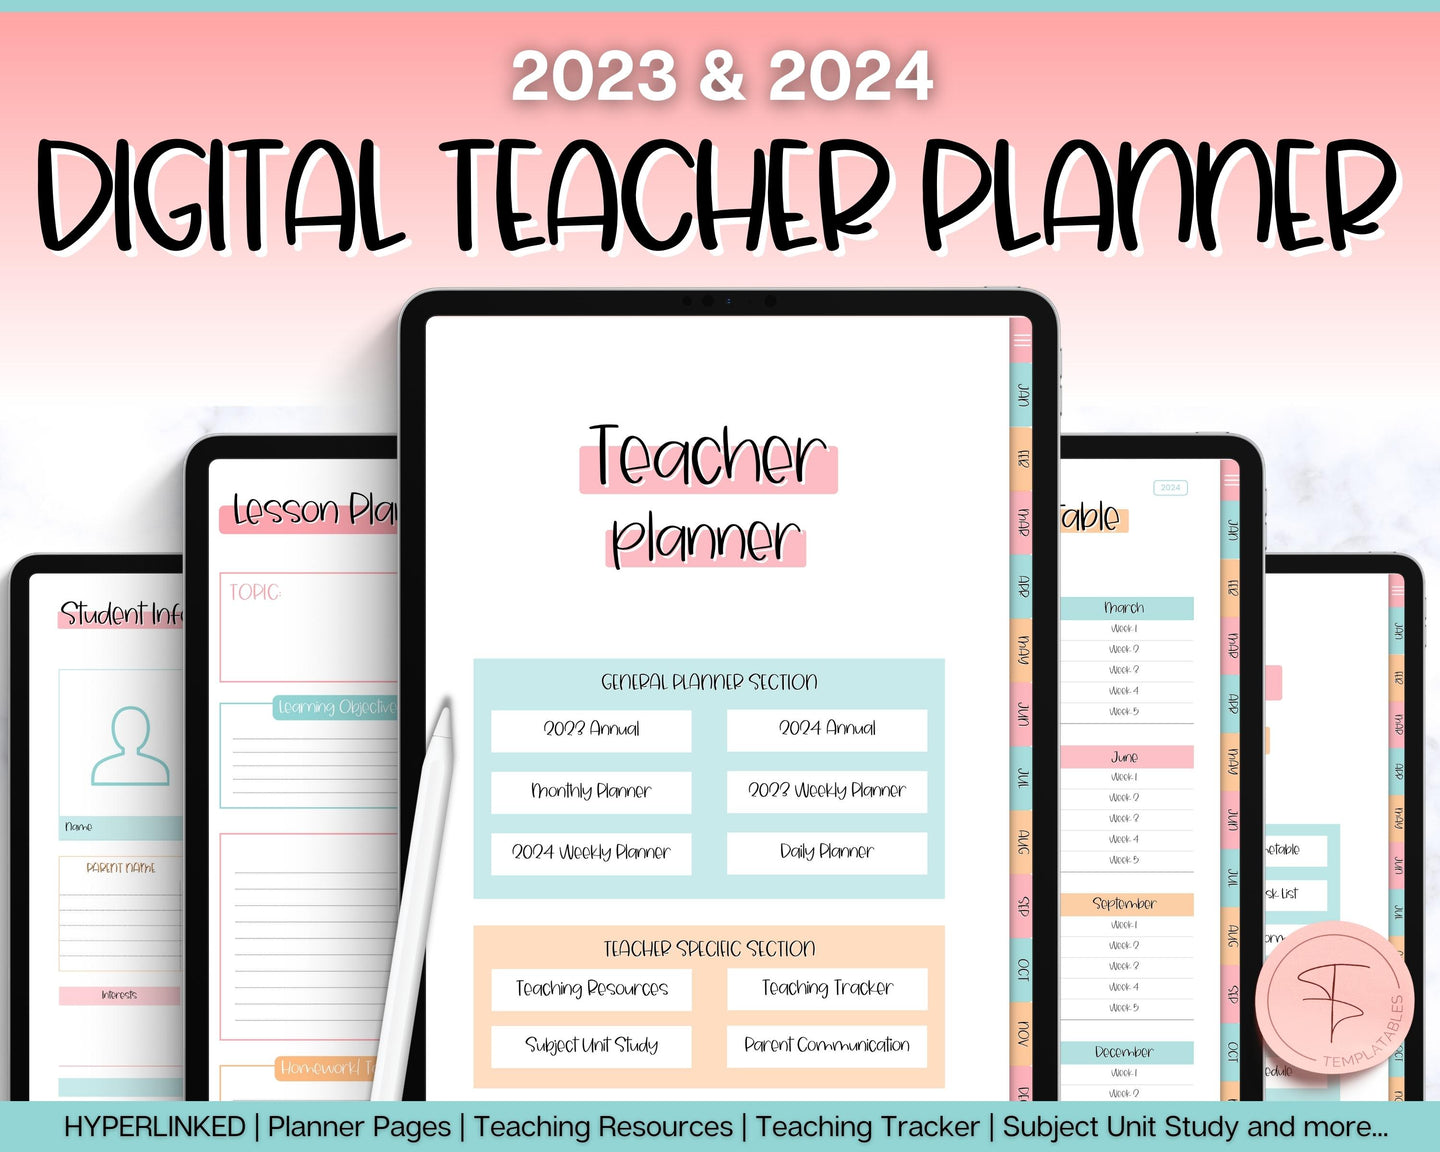 Digital Teacher Planner - 2023 & 2024 Academic Planner | GoodNotes Homeschool Lesson Plan Template for iPad | Colorful Sky